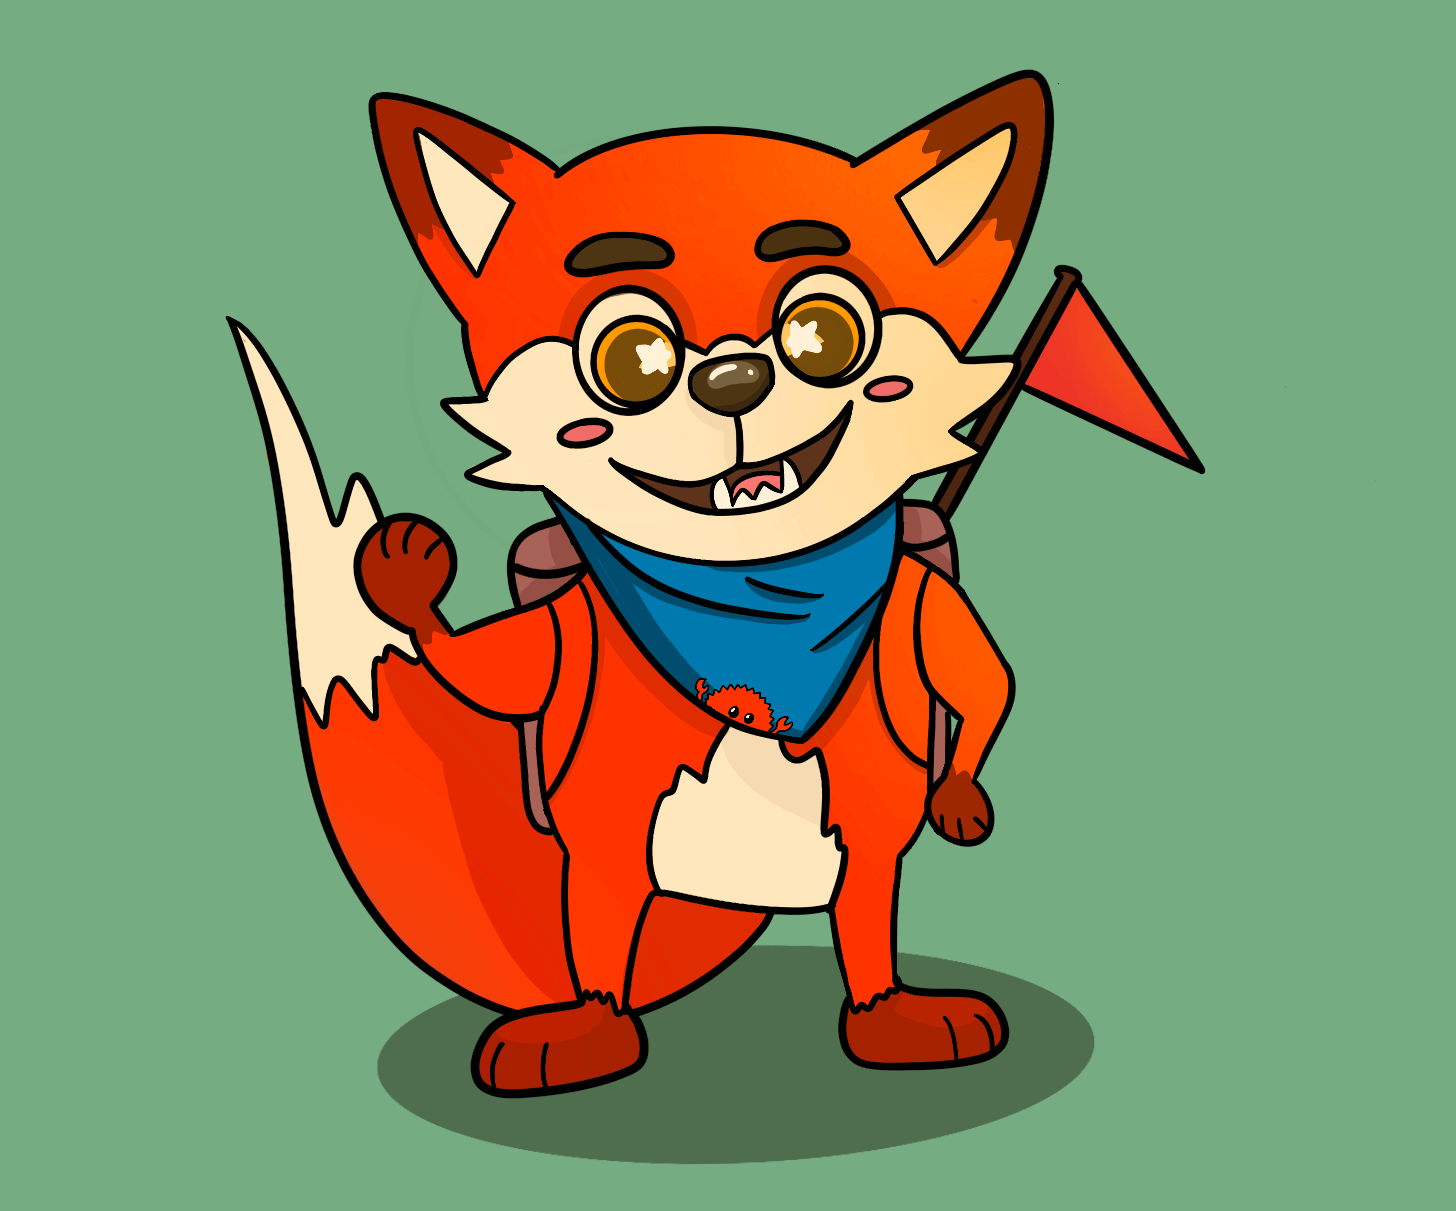 Aaron: a drawing of a humanoid fox